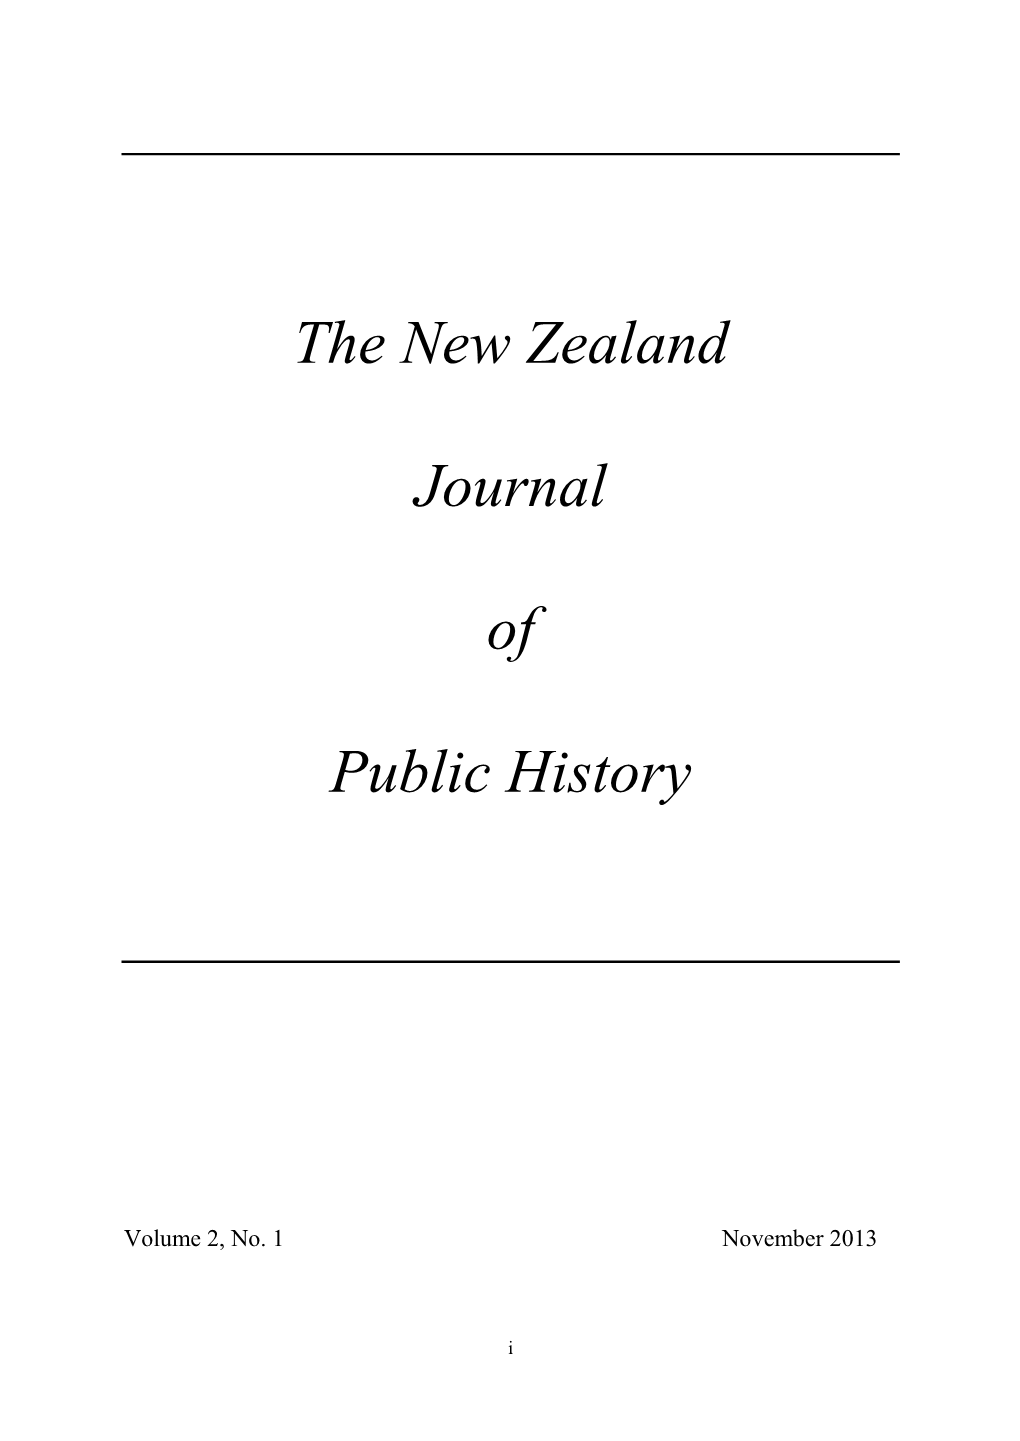 The New Zealand Journal of Public History Is an Occasional Journal Published by the Public History Research Unit (PHRU), University of Waikato